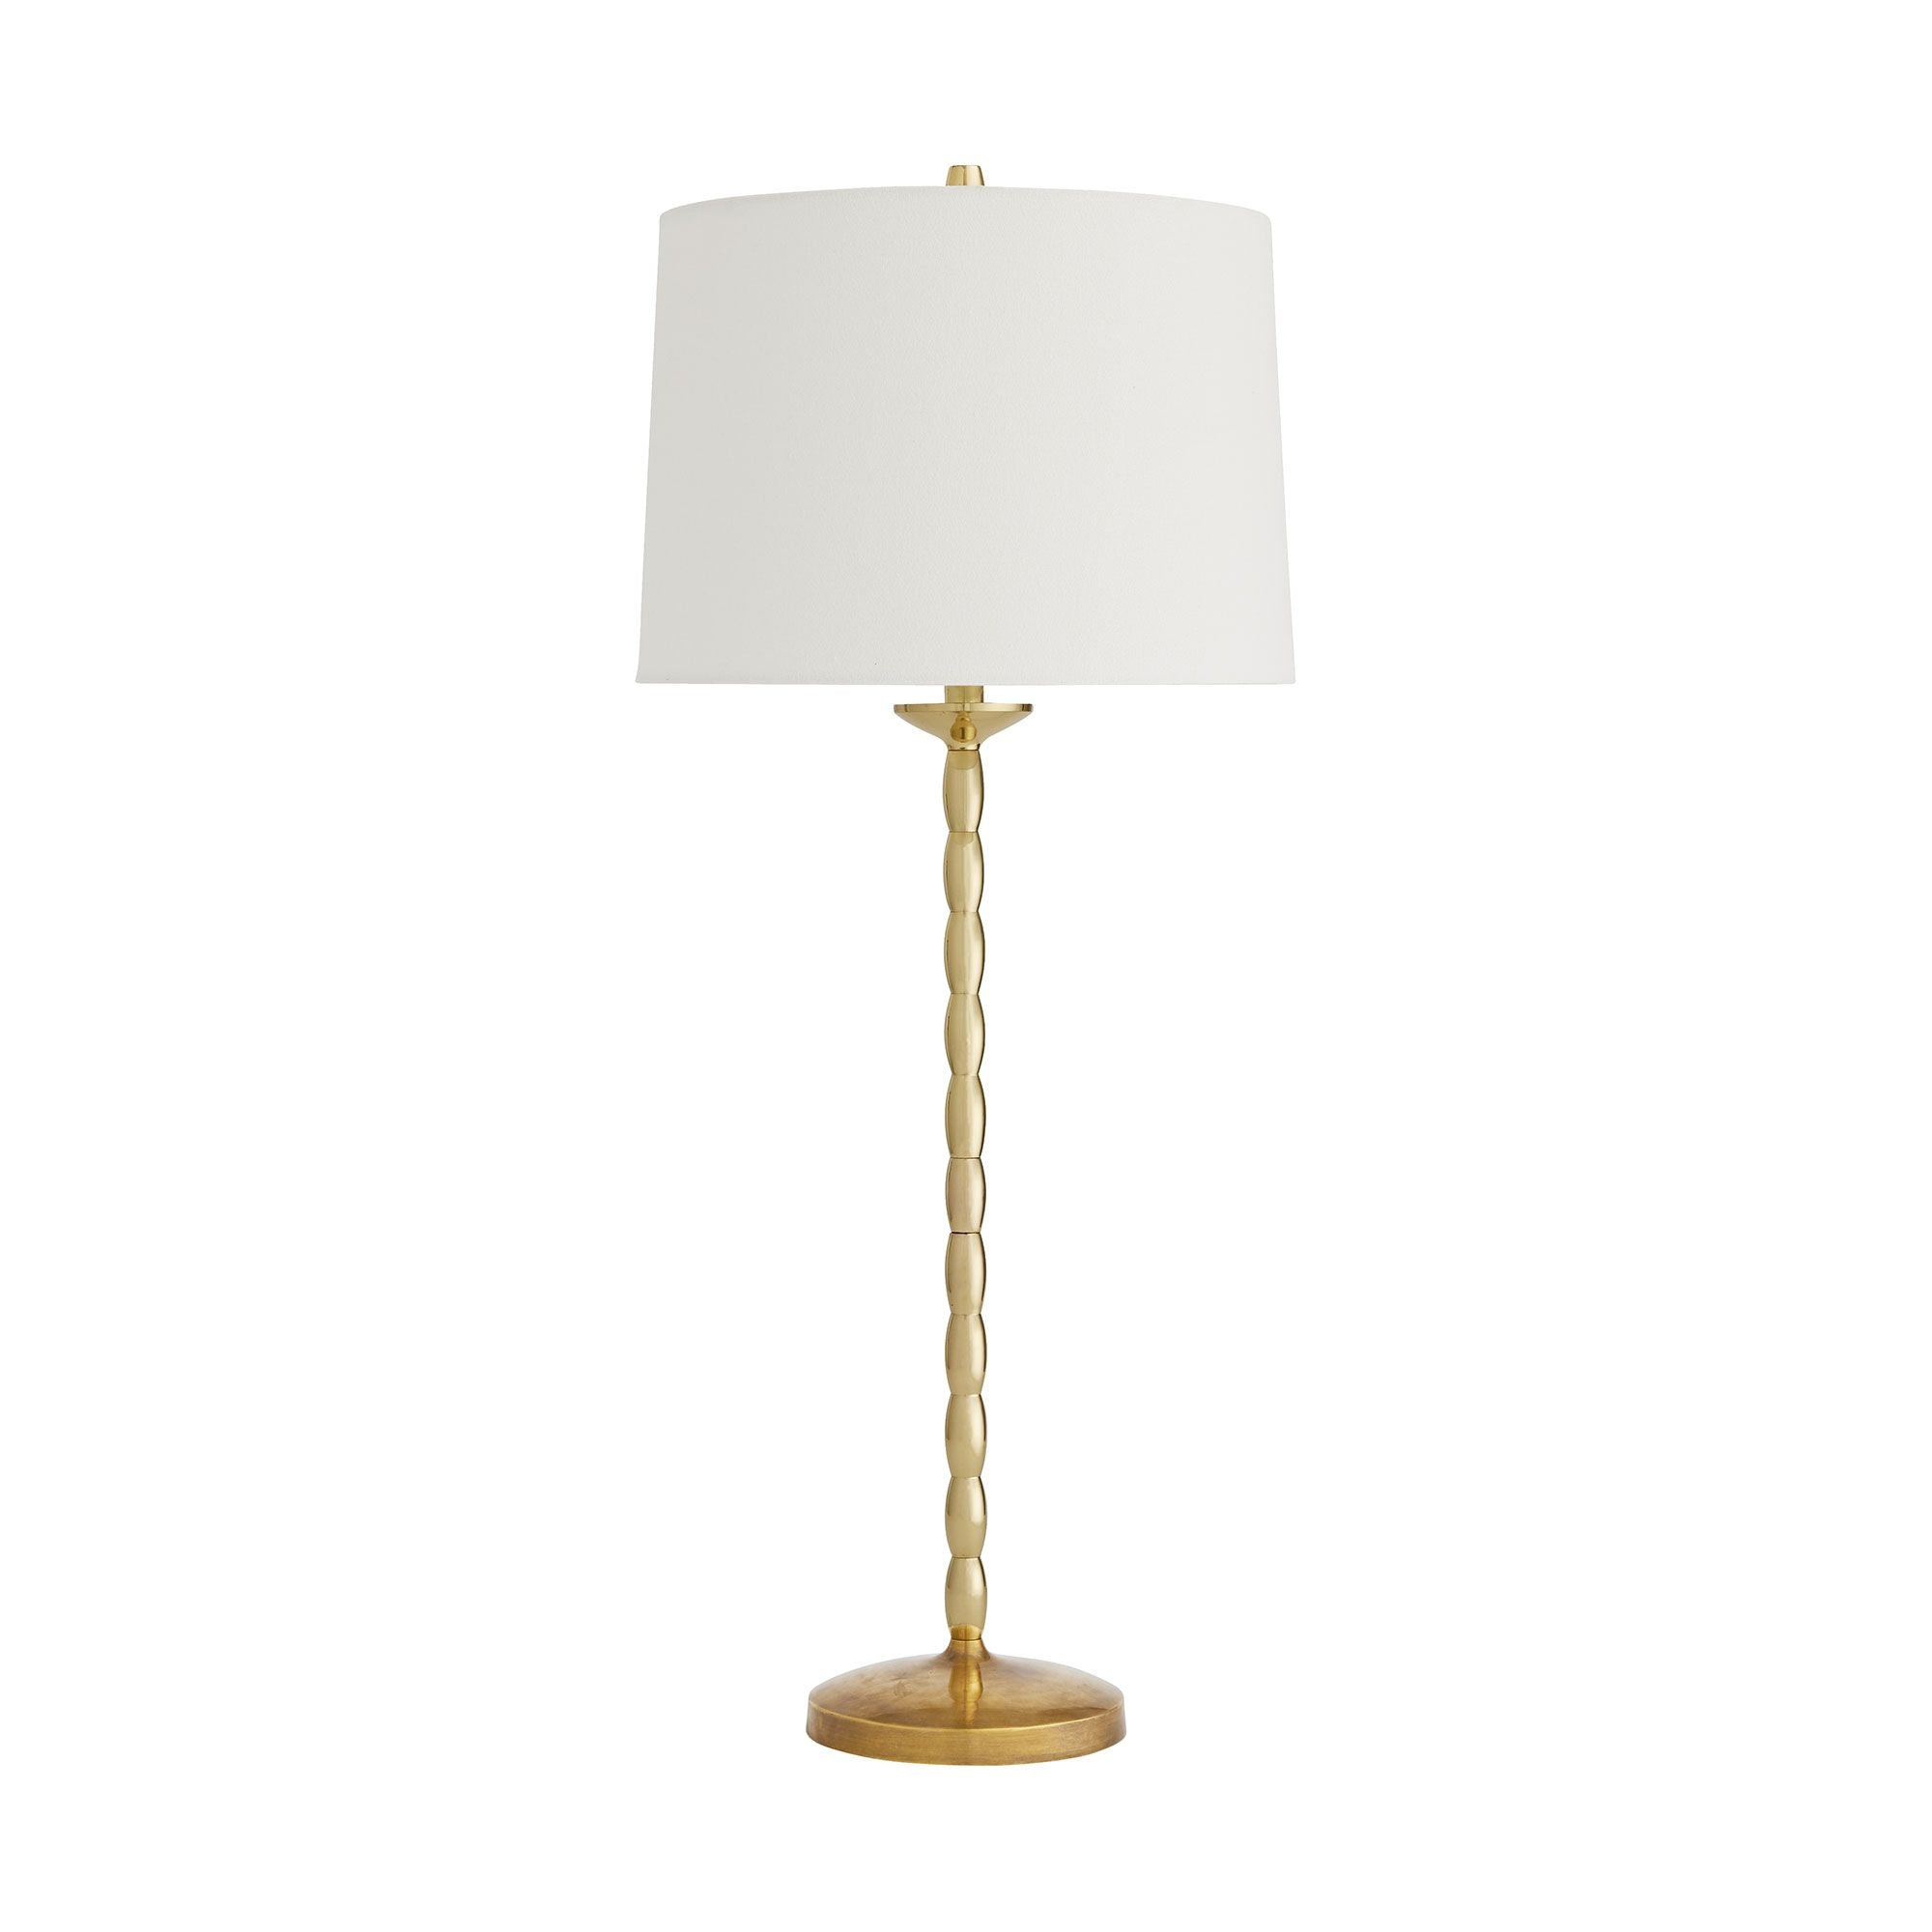 Table lamp Gold - 44767-246 | ARTERIORS